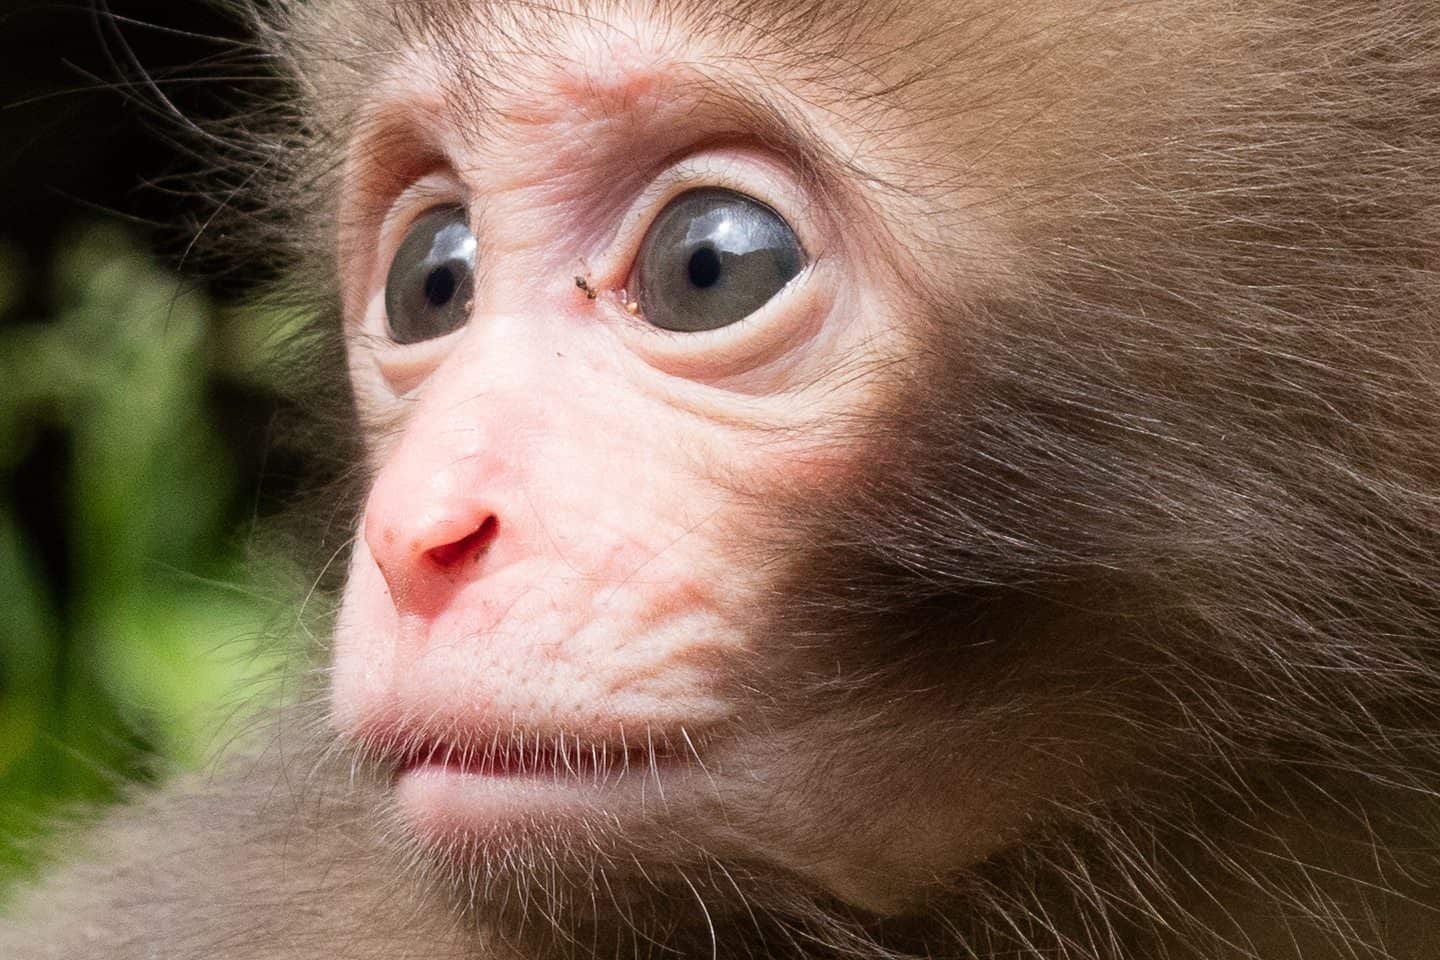 Six Week Old Snow Monkey (100% Crop)